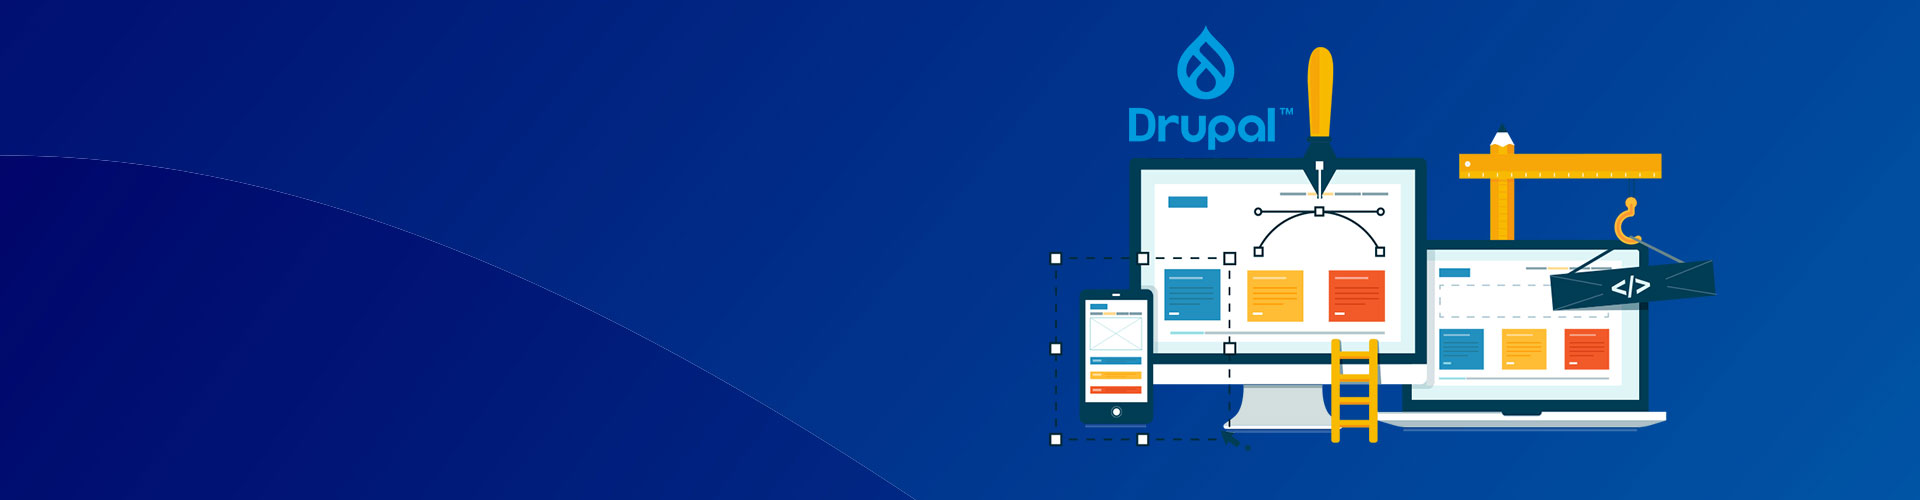 drupal-website-development-banner